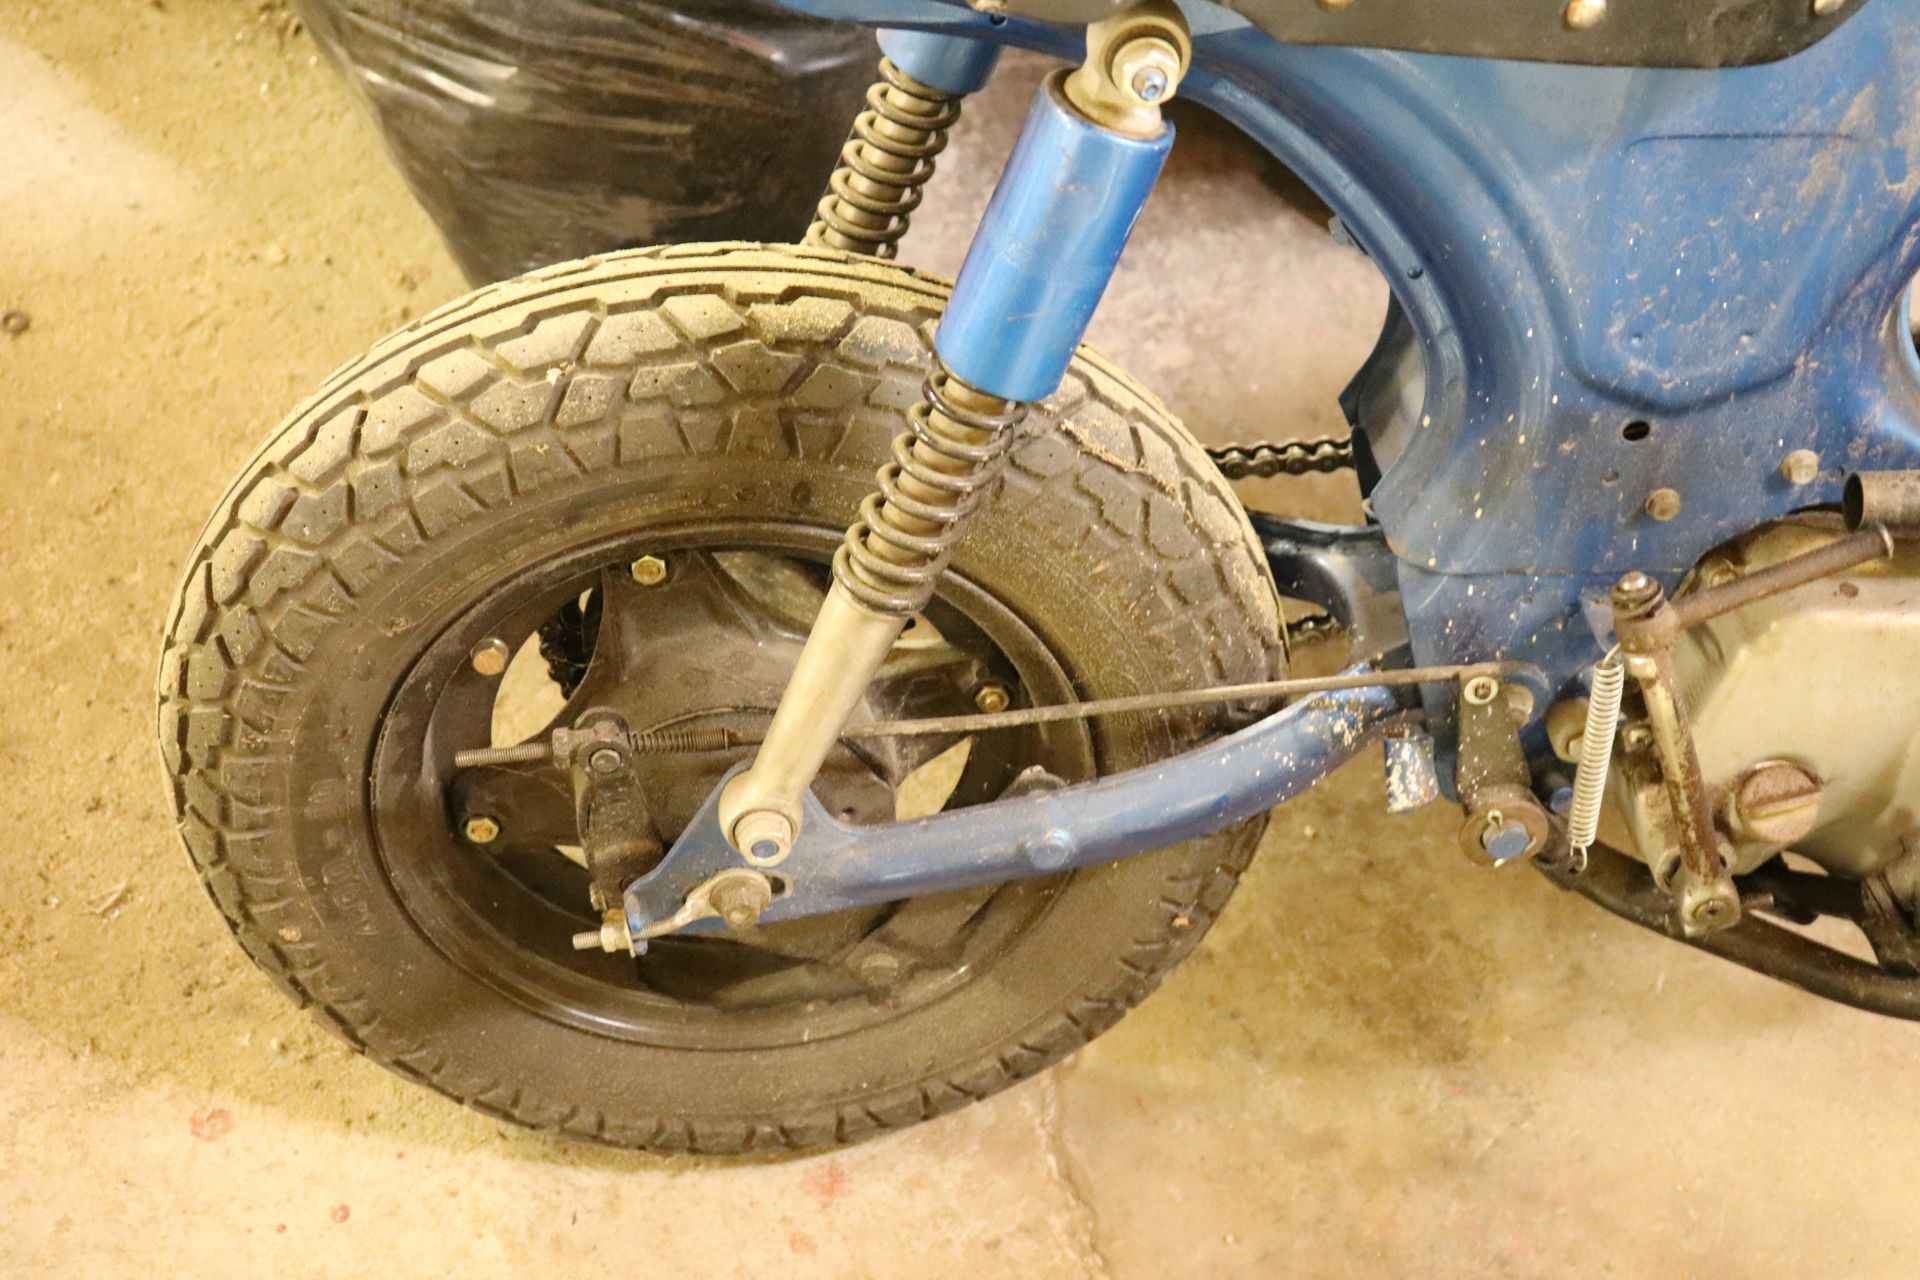 Honda mini bike, parts bike, 72cm cubic engine - Image 5 of 6